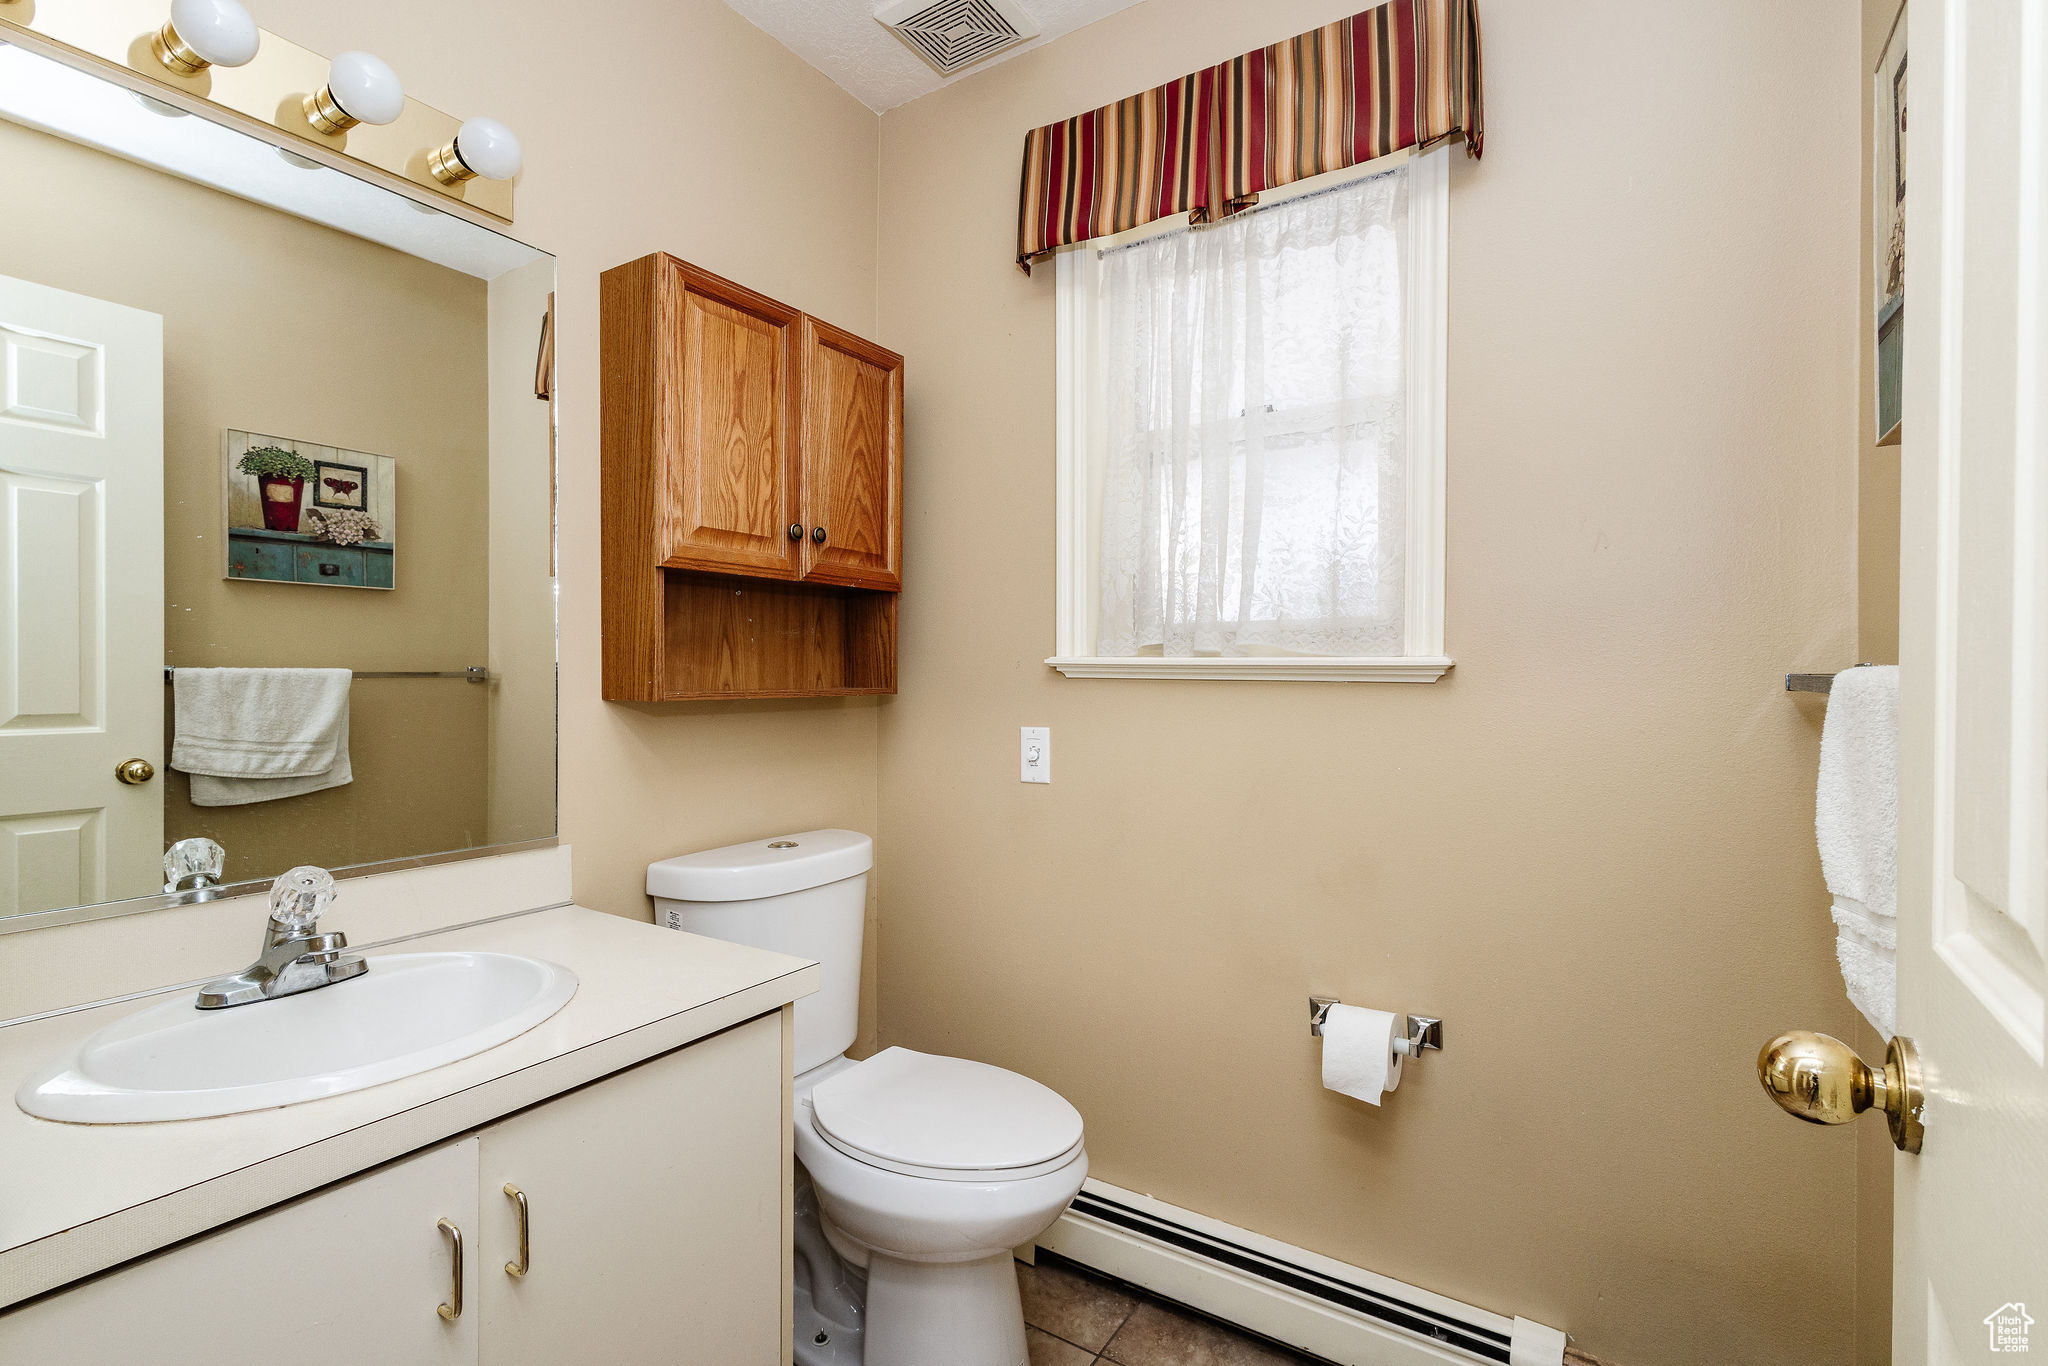 Bathroom with baseboard heating, toilet, tile flooring, and large vanity